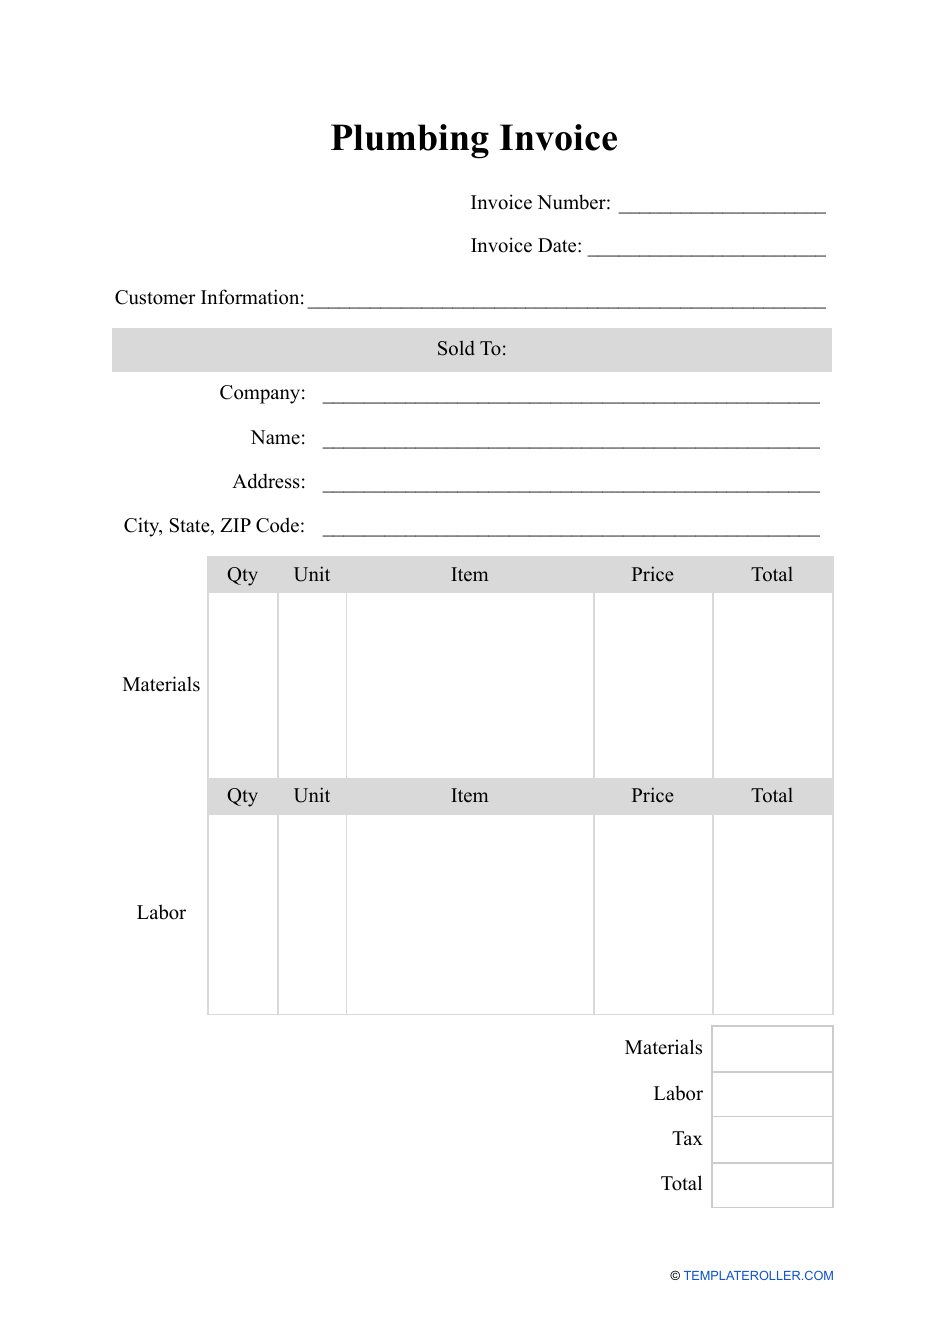 plumbing invoice template download printable pdf templateroller